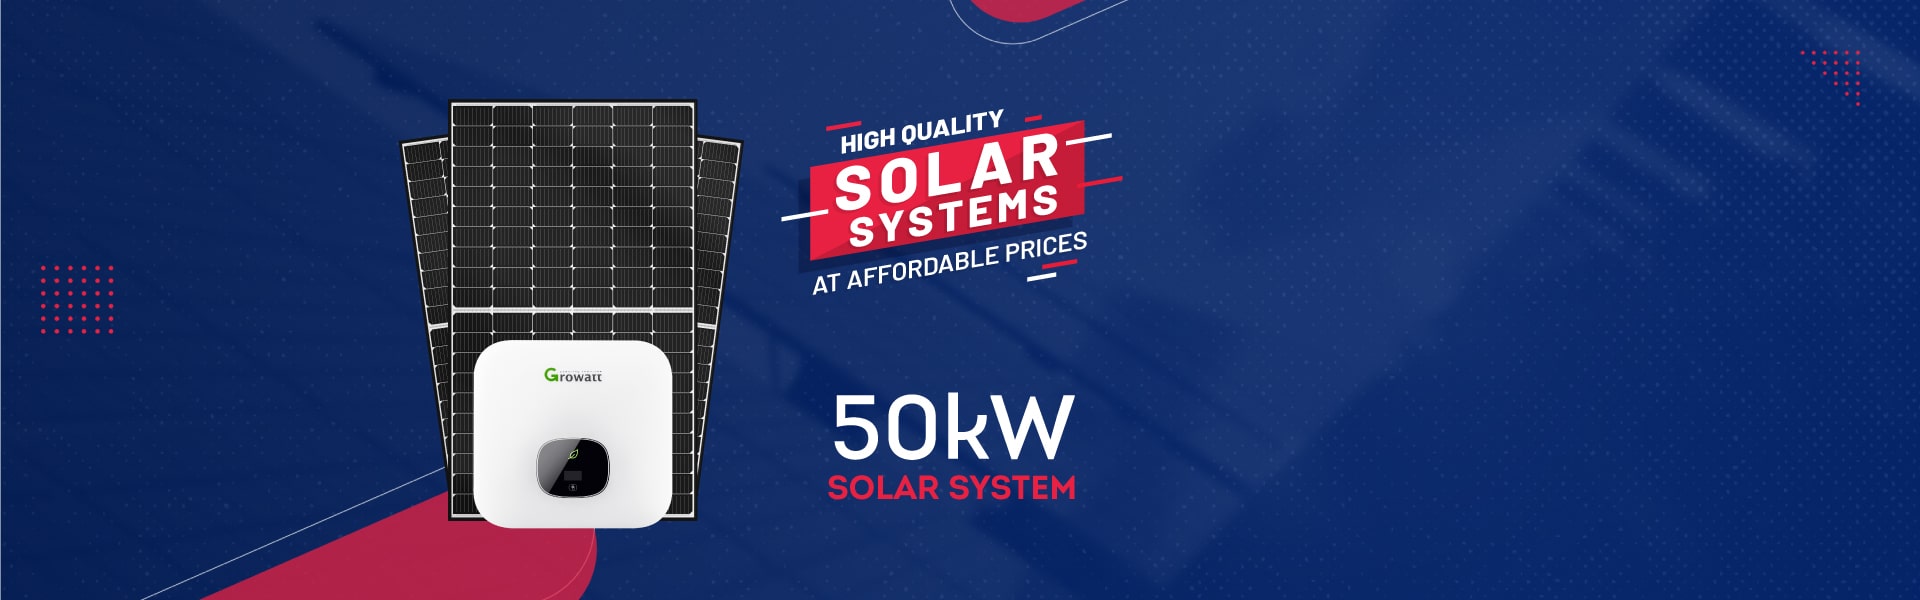 50kw solar panel system banner